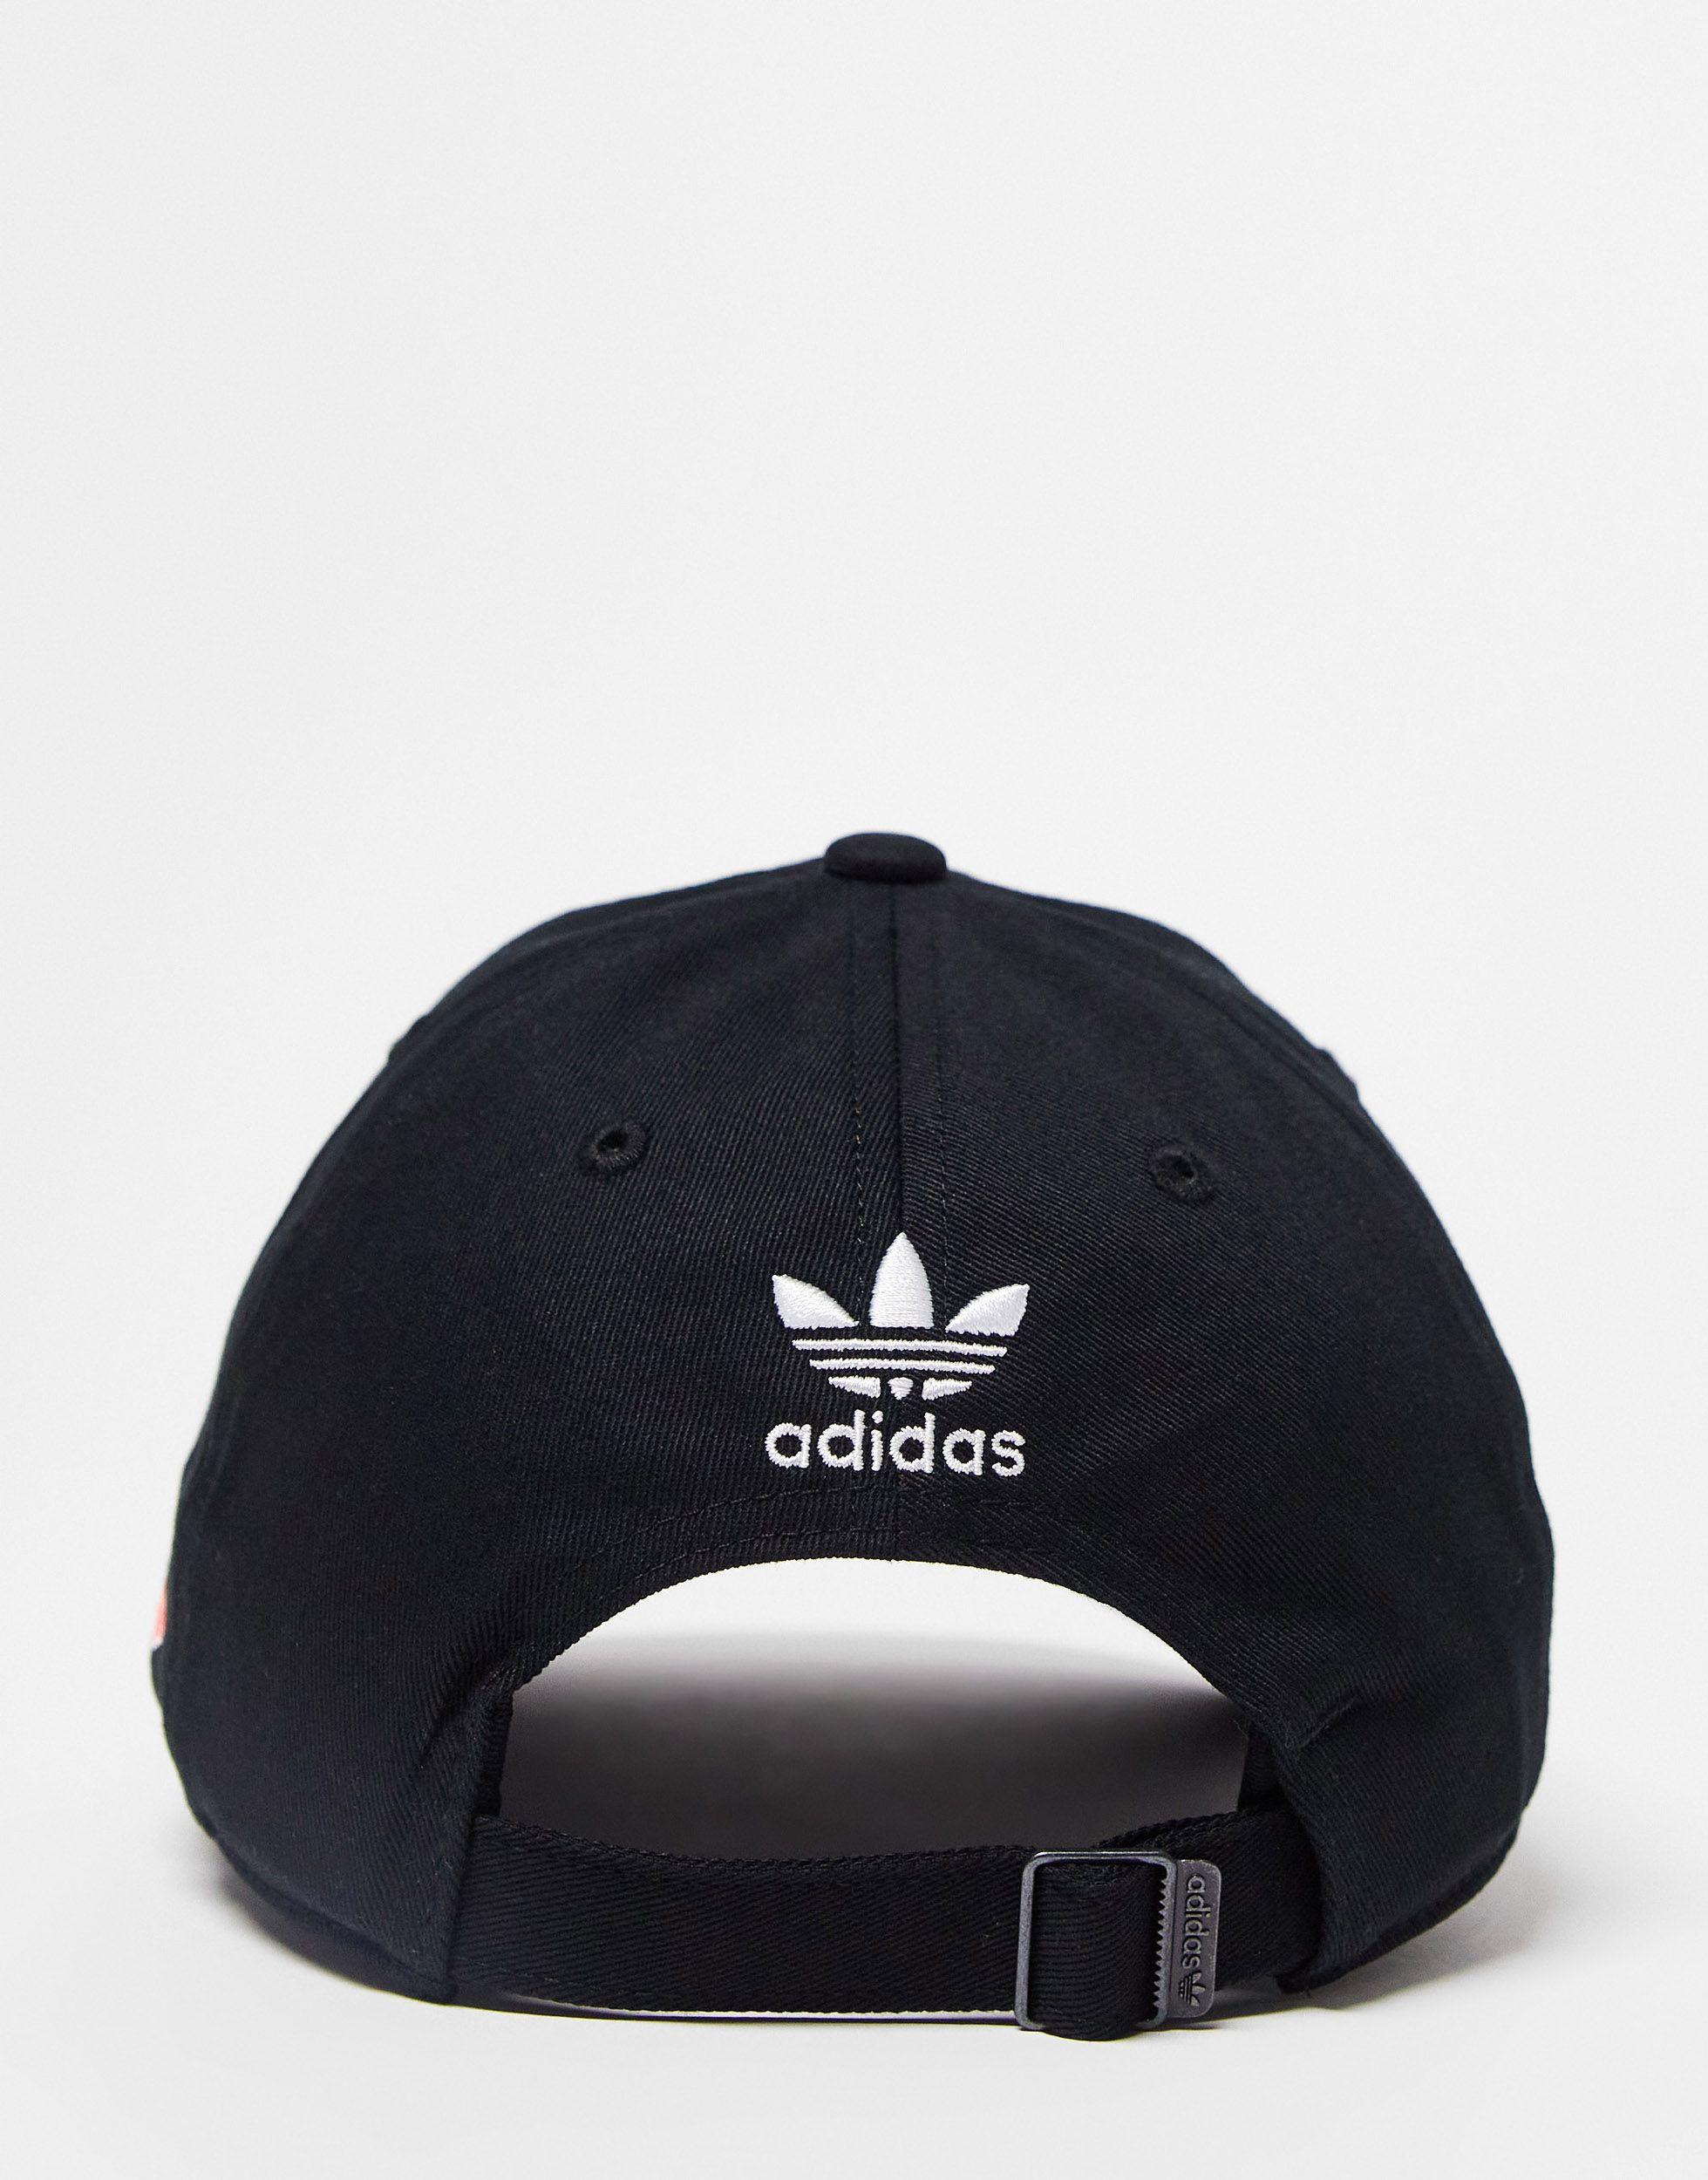 adidas Originals 'always Original' Floral Baseball Cap in Black | Lyst